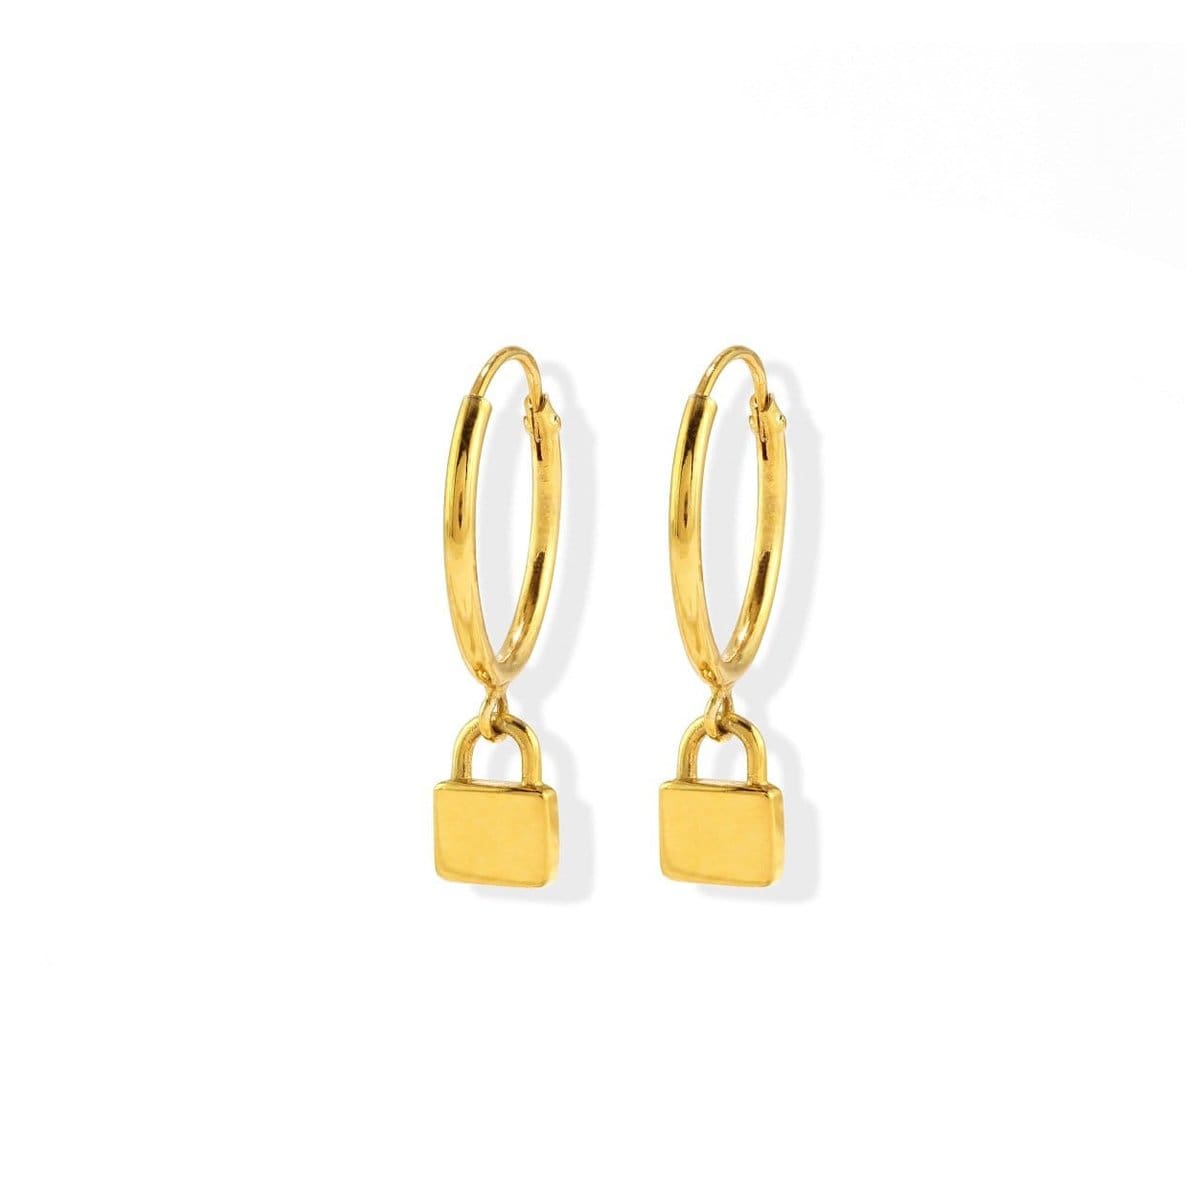 Boma Jewelry Earrings 14K Gold Plated Lock Hoops